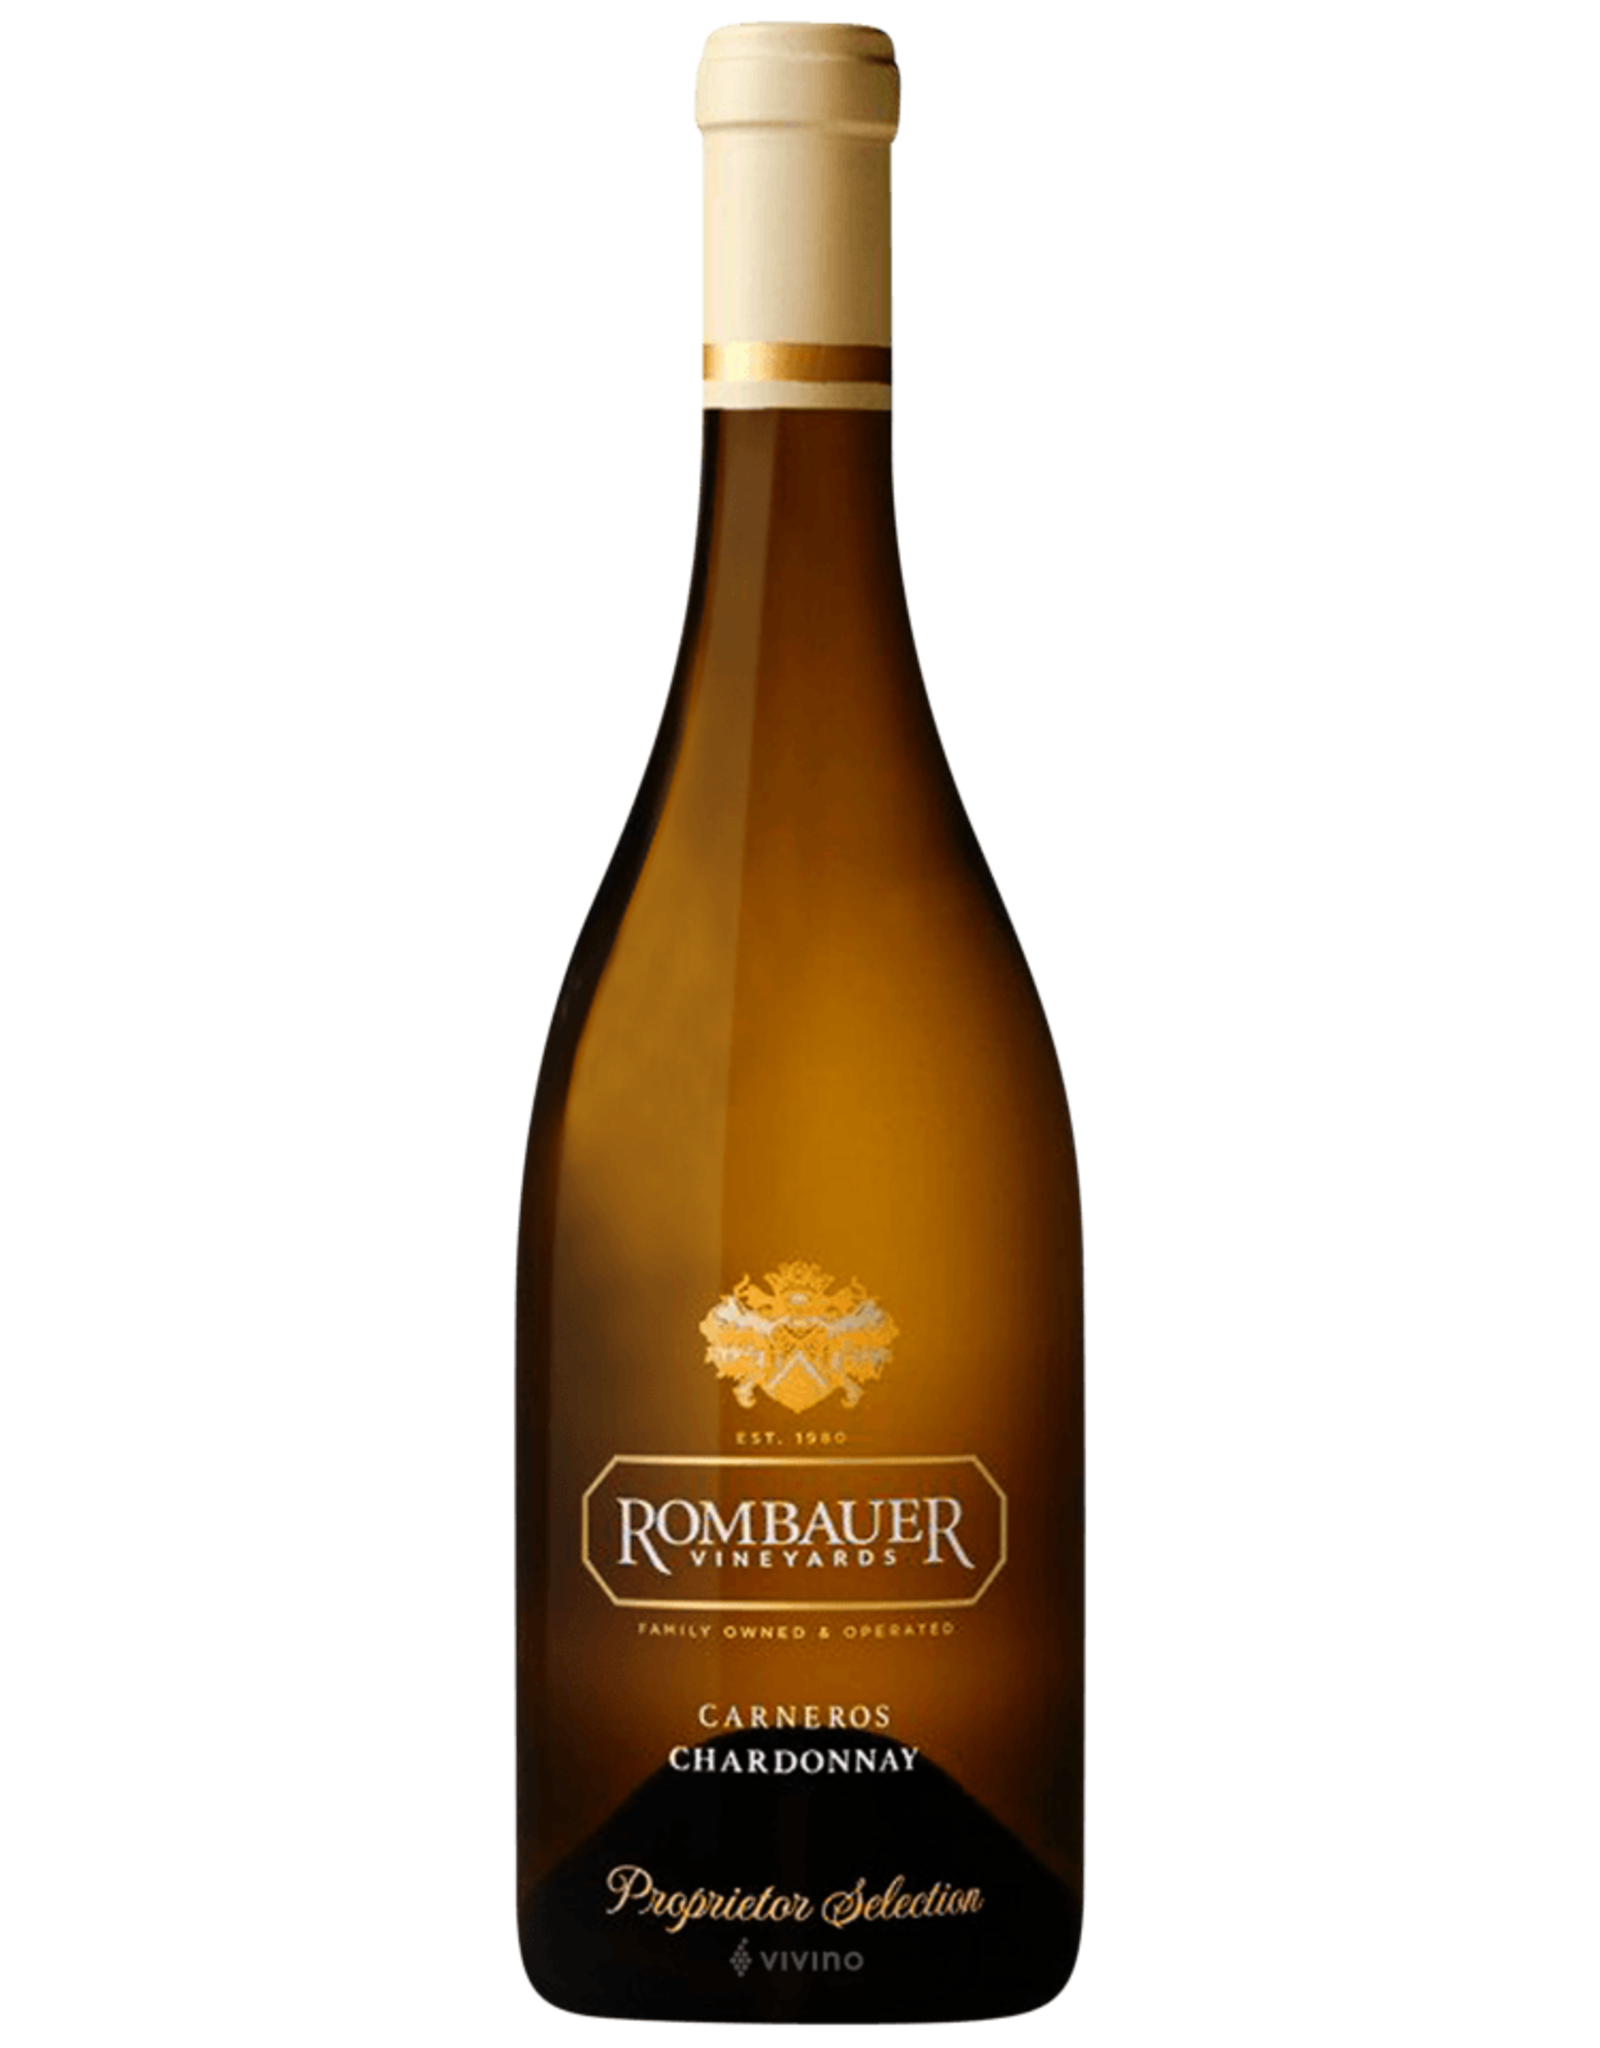 Rombauer Proprietor Selection Chardonnay 2020